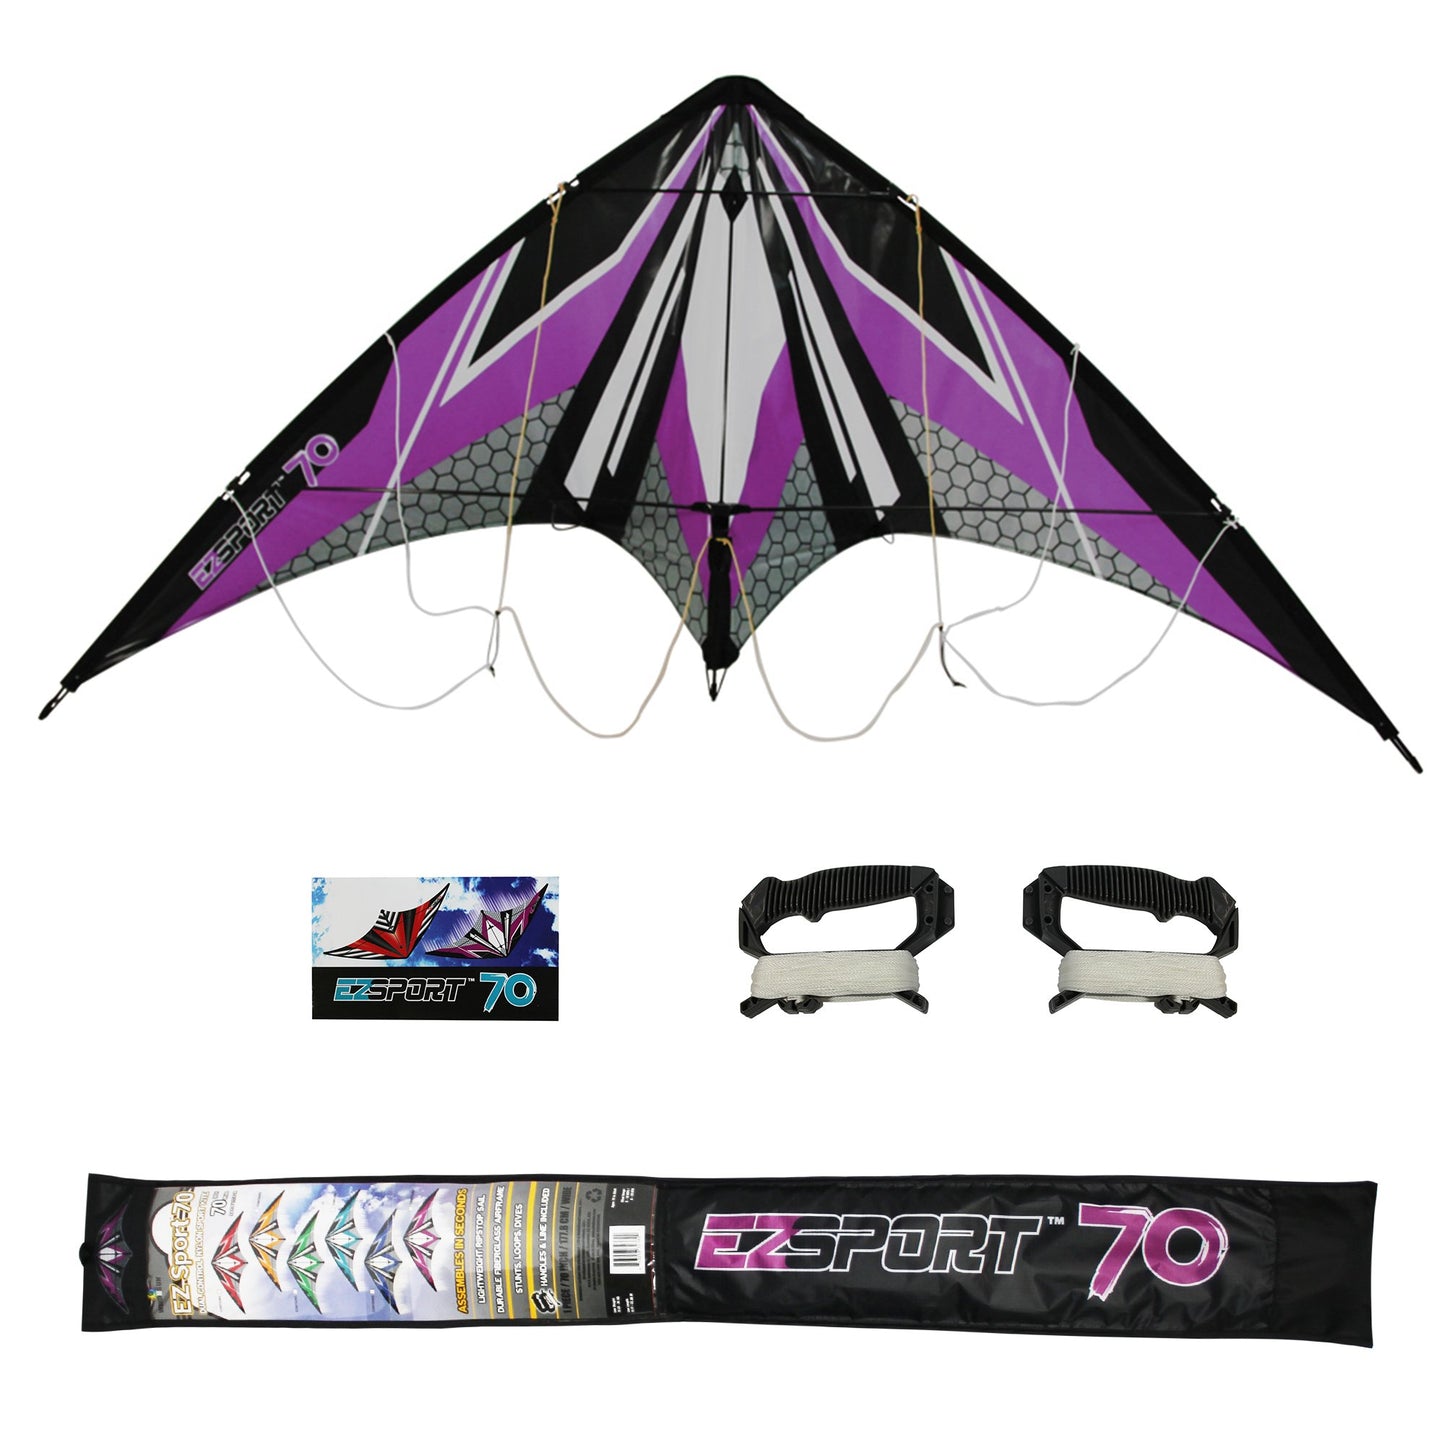 WindNSun EZ Sport 70 Dual Control Sport Kite Purple Hexagon Nylon Kite photo showing handle